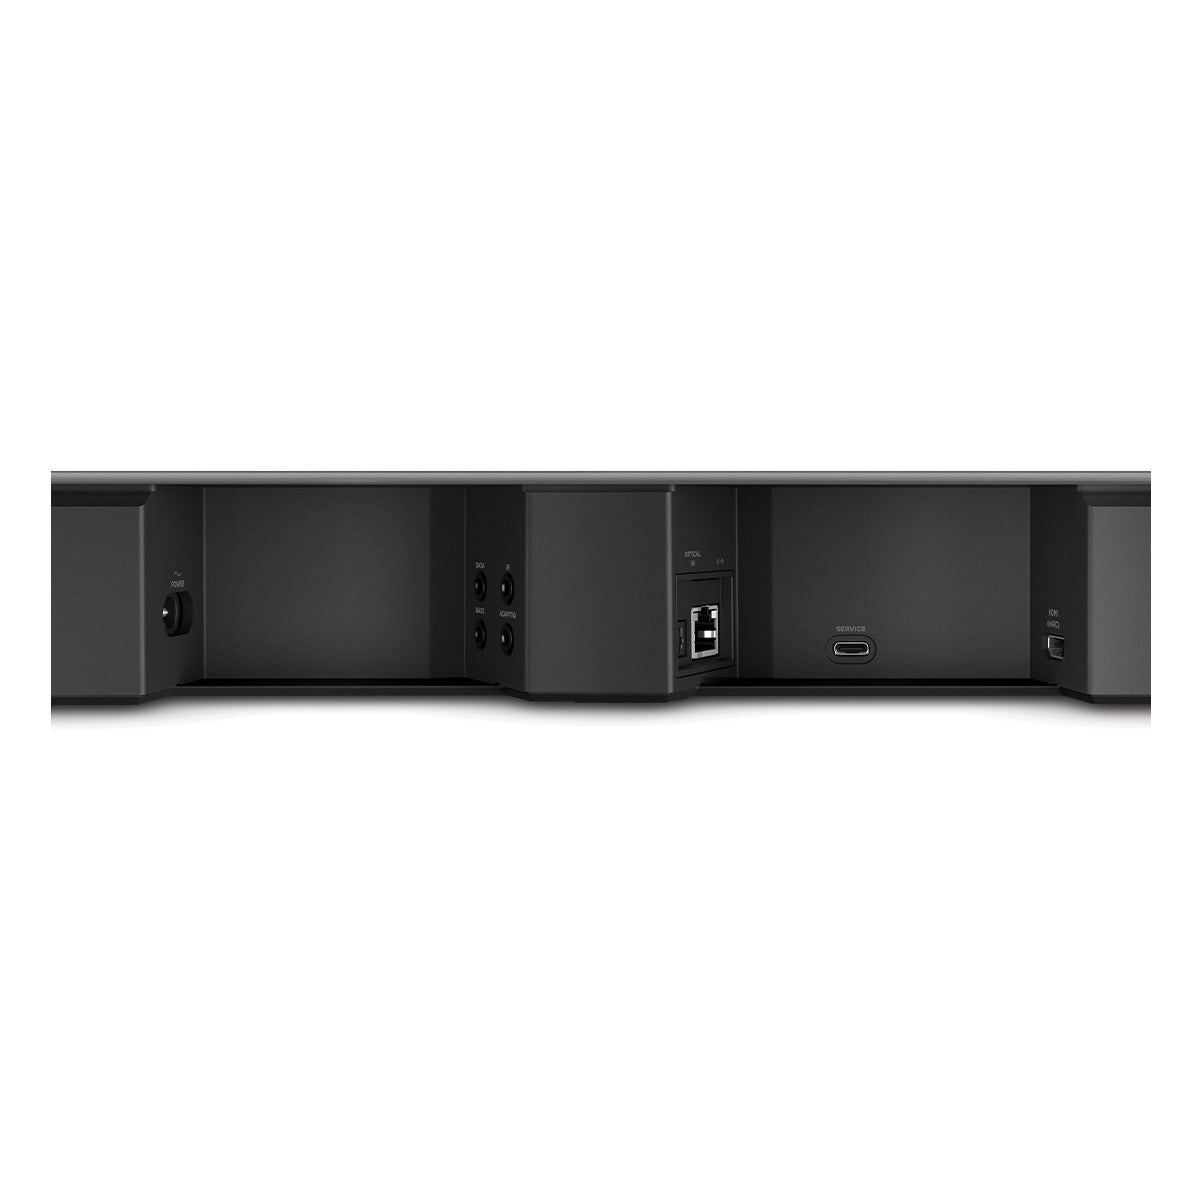  Bose Smart Soundbar 900 Dolby Atmos with Alexa Built-In,  Bluetooth connectivity - Black (Renewed) : Electronics